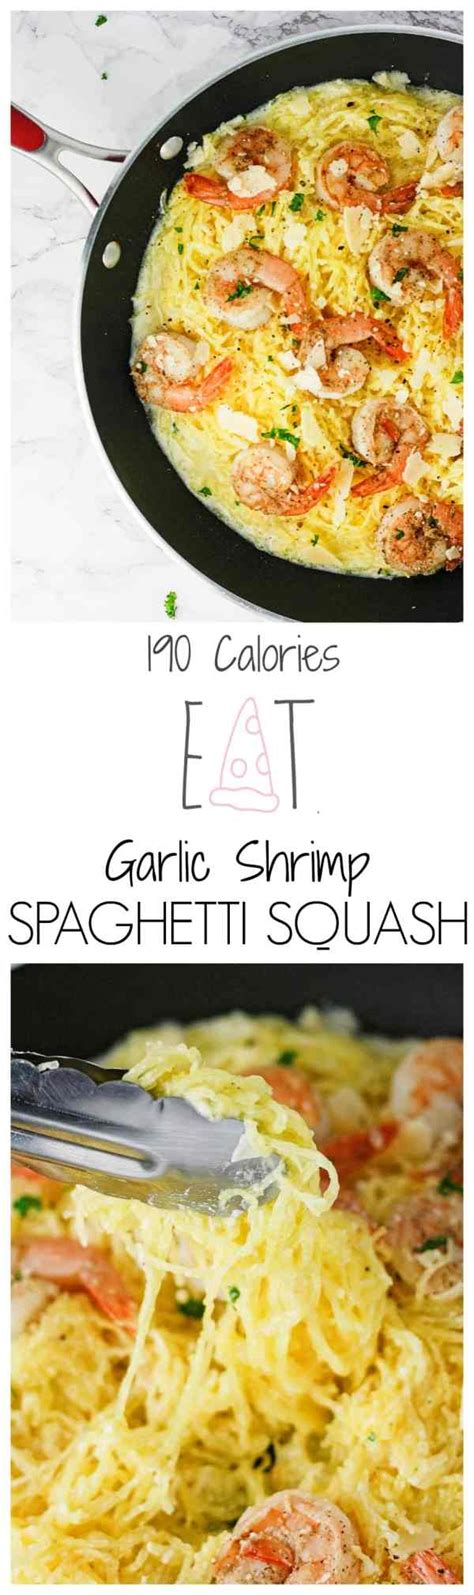 Garlic Shrimp Spaghetti Squash Its Cheat Day Everyday